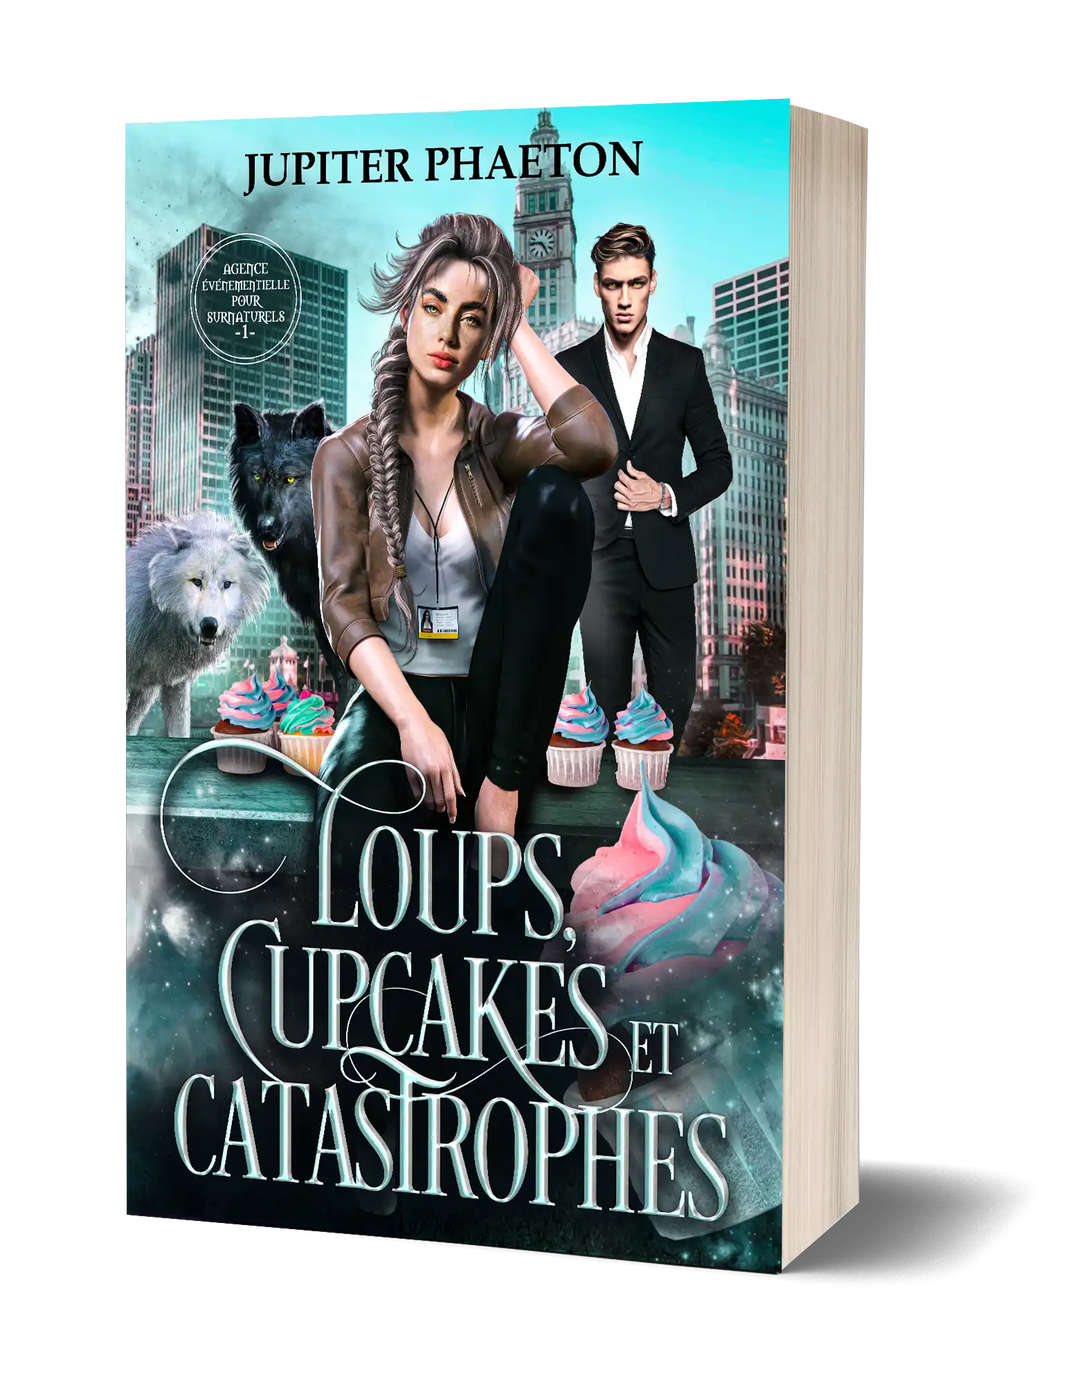 Loups, Cupcakes et Catastrophes tome 1